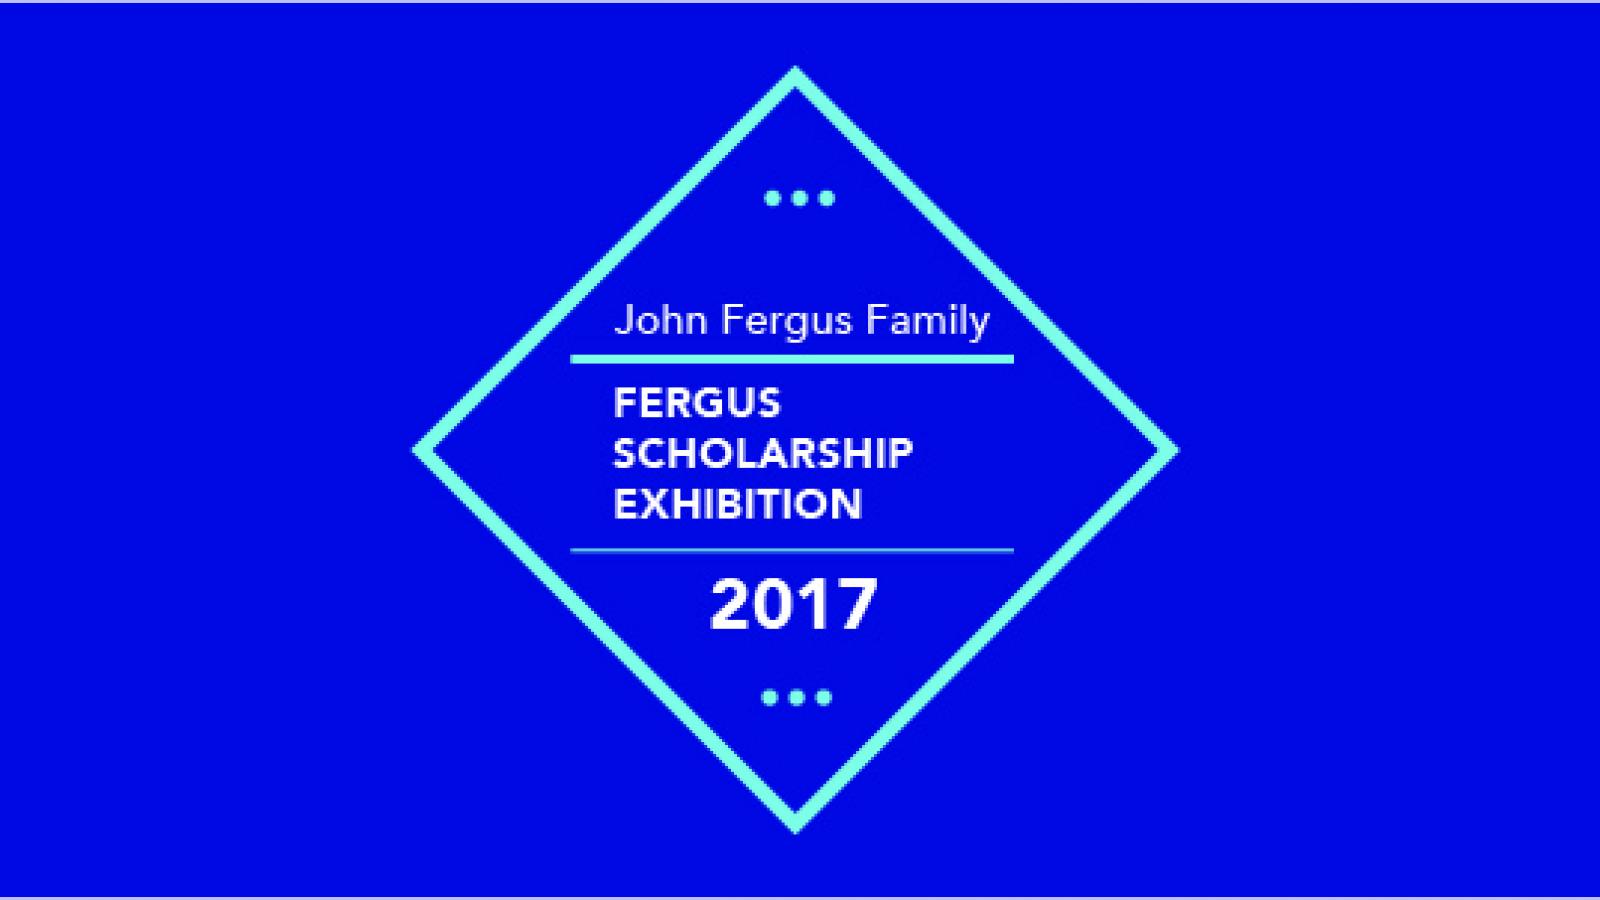 Fergus Scholarship Award Exhibition 2017 banner